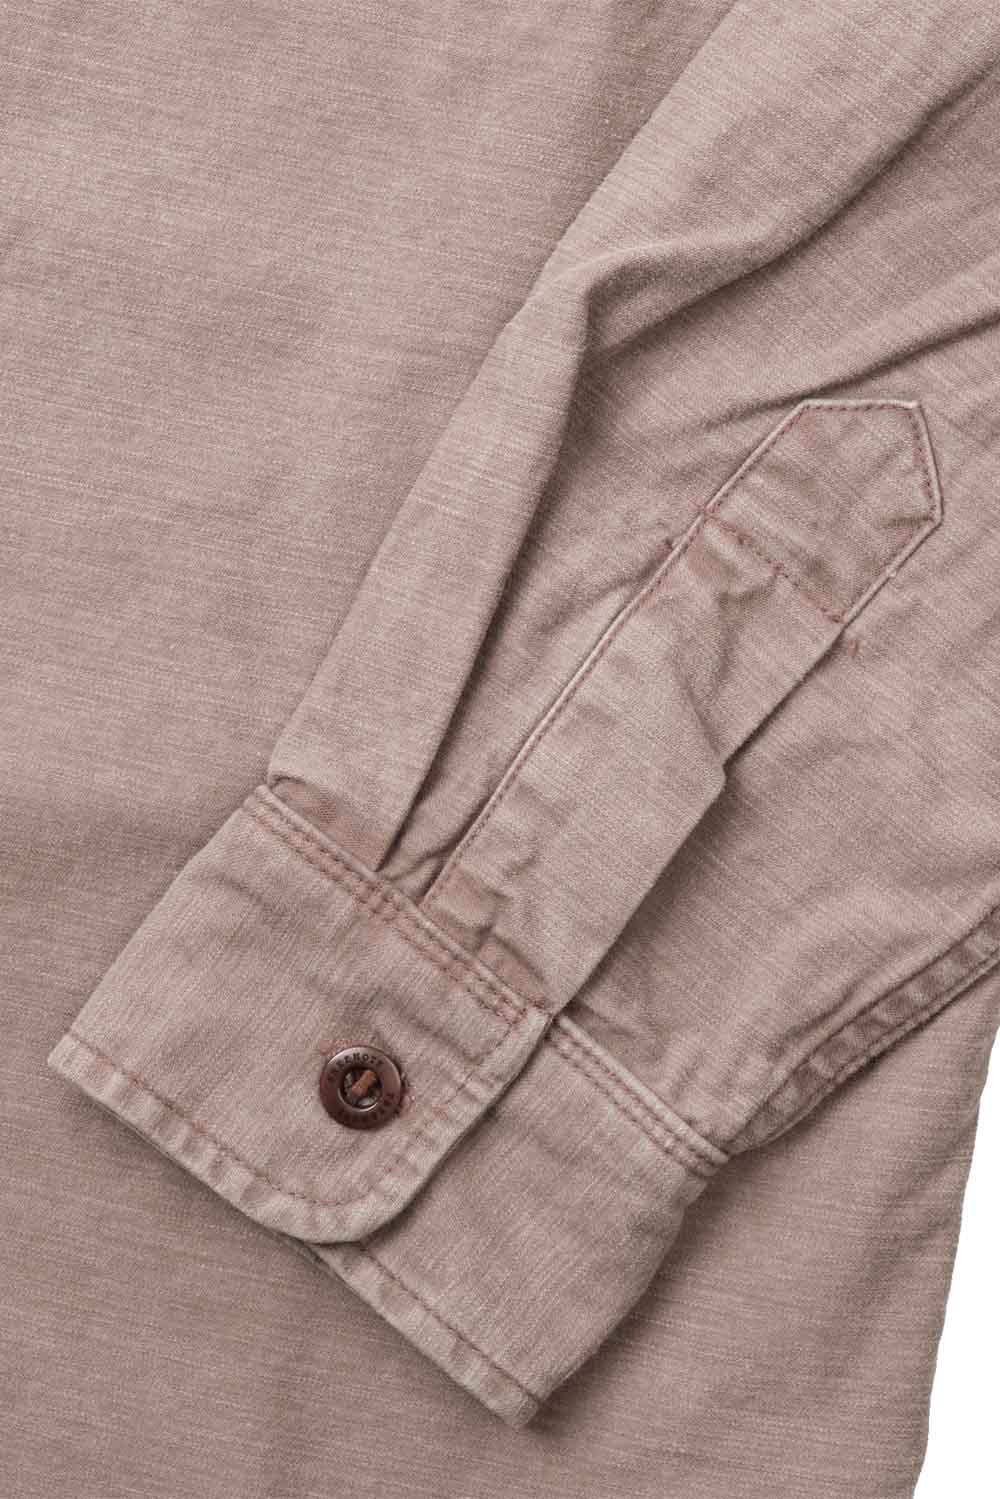 Freenote Cloth - Utility - Light Grey - Sleeve